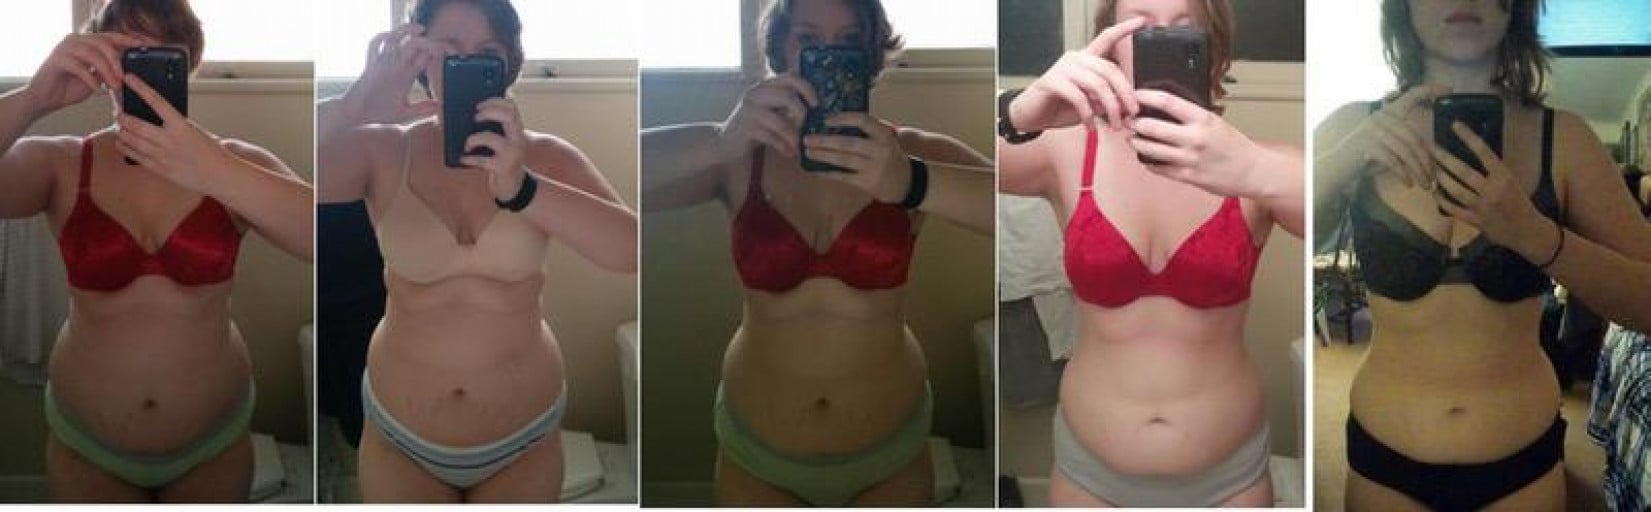 A Successful Weight Loss Journey: Reddit User's Transformative Progress